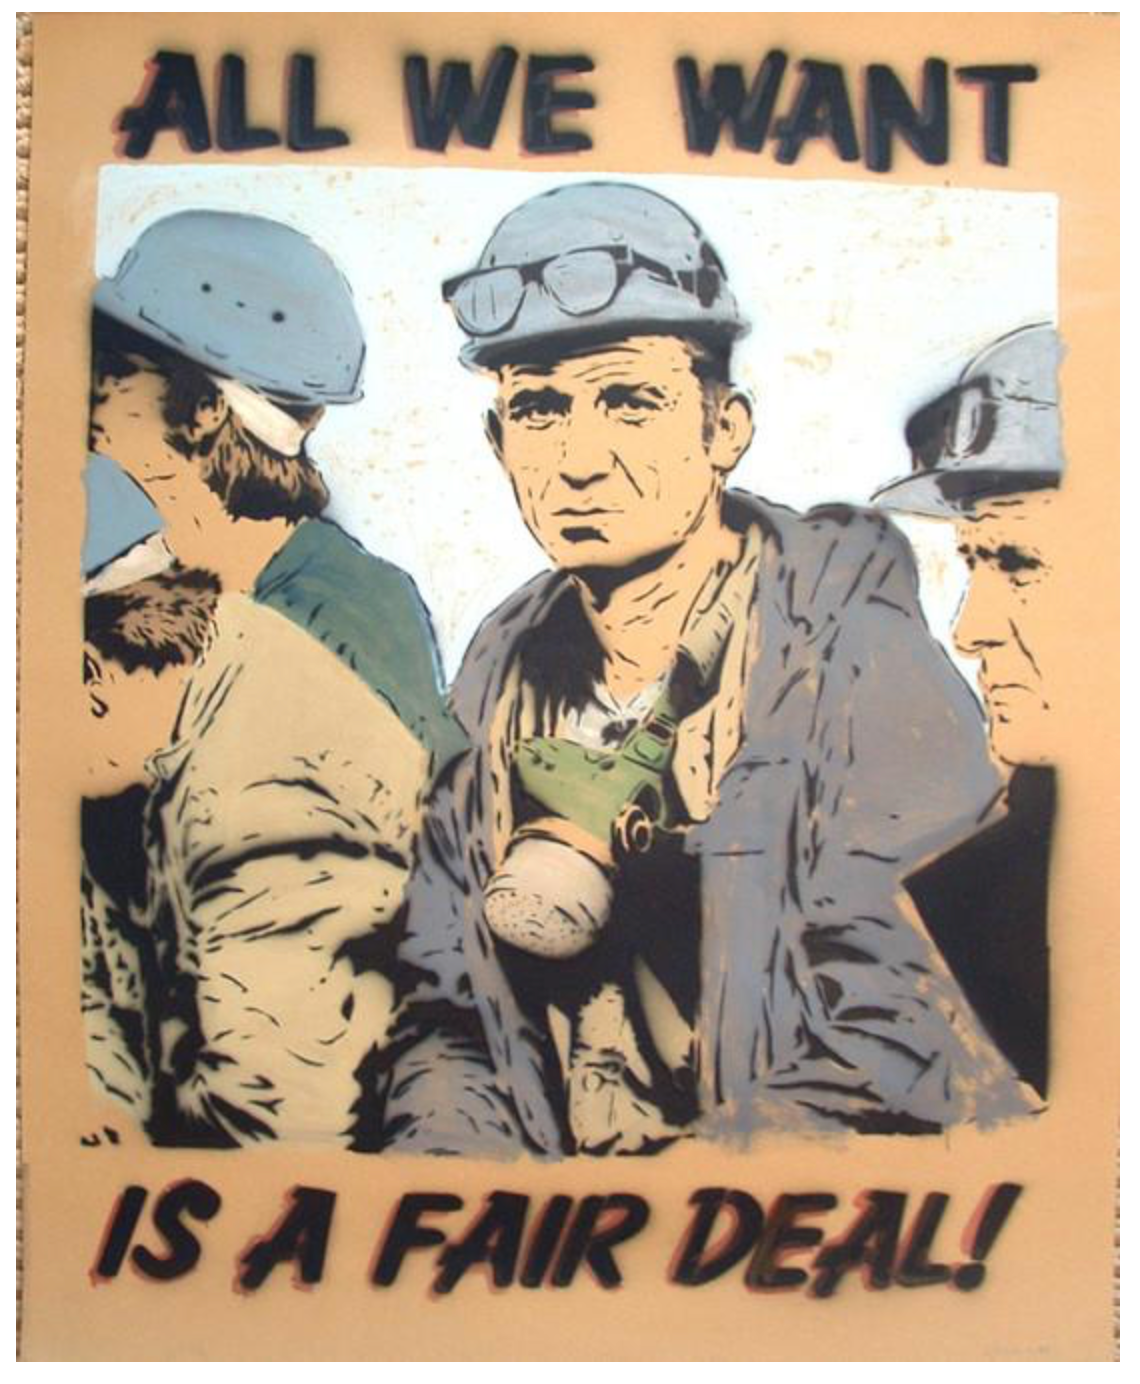 CHRIS STAIN - "Fair Deal" Reworked